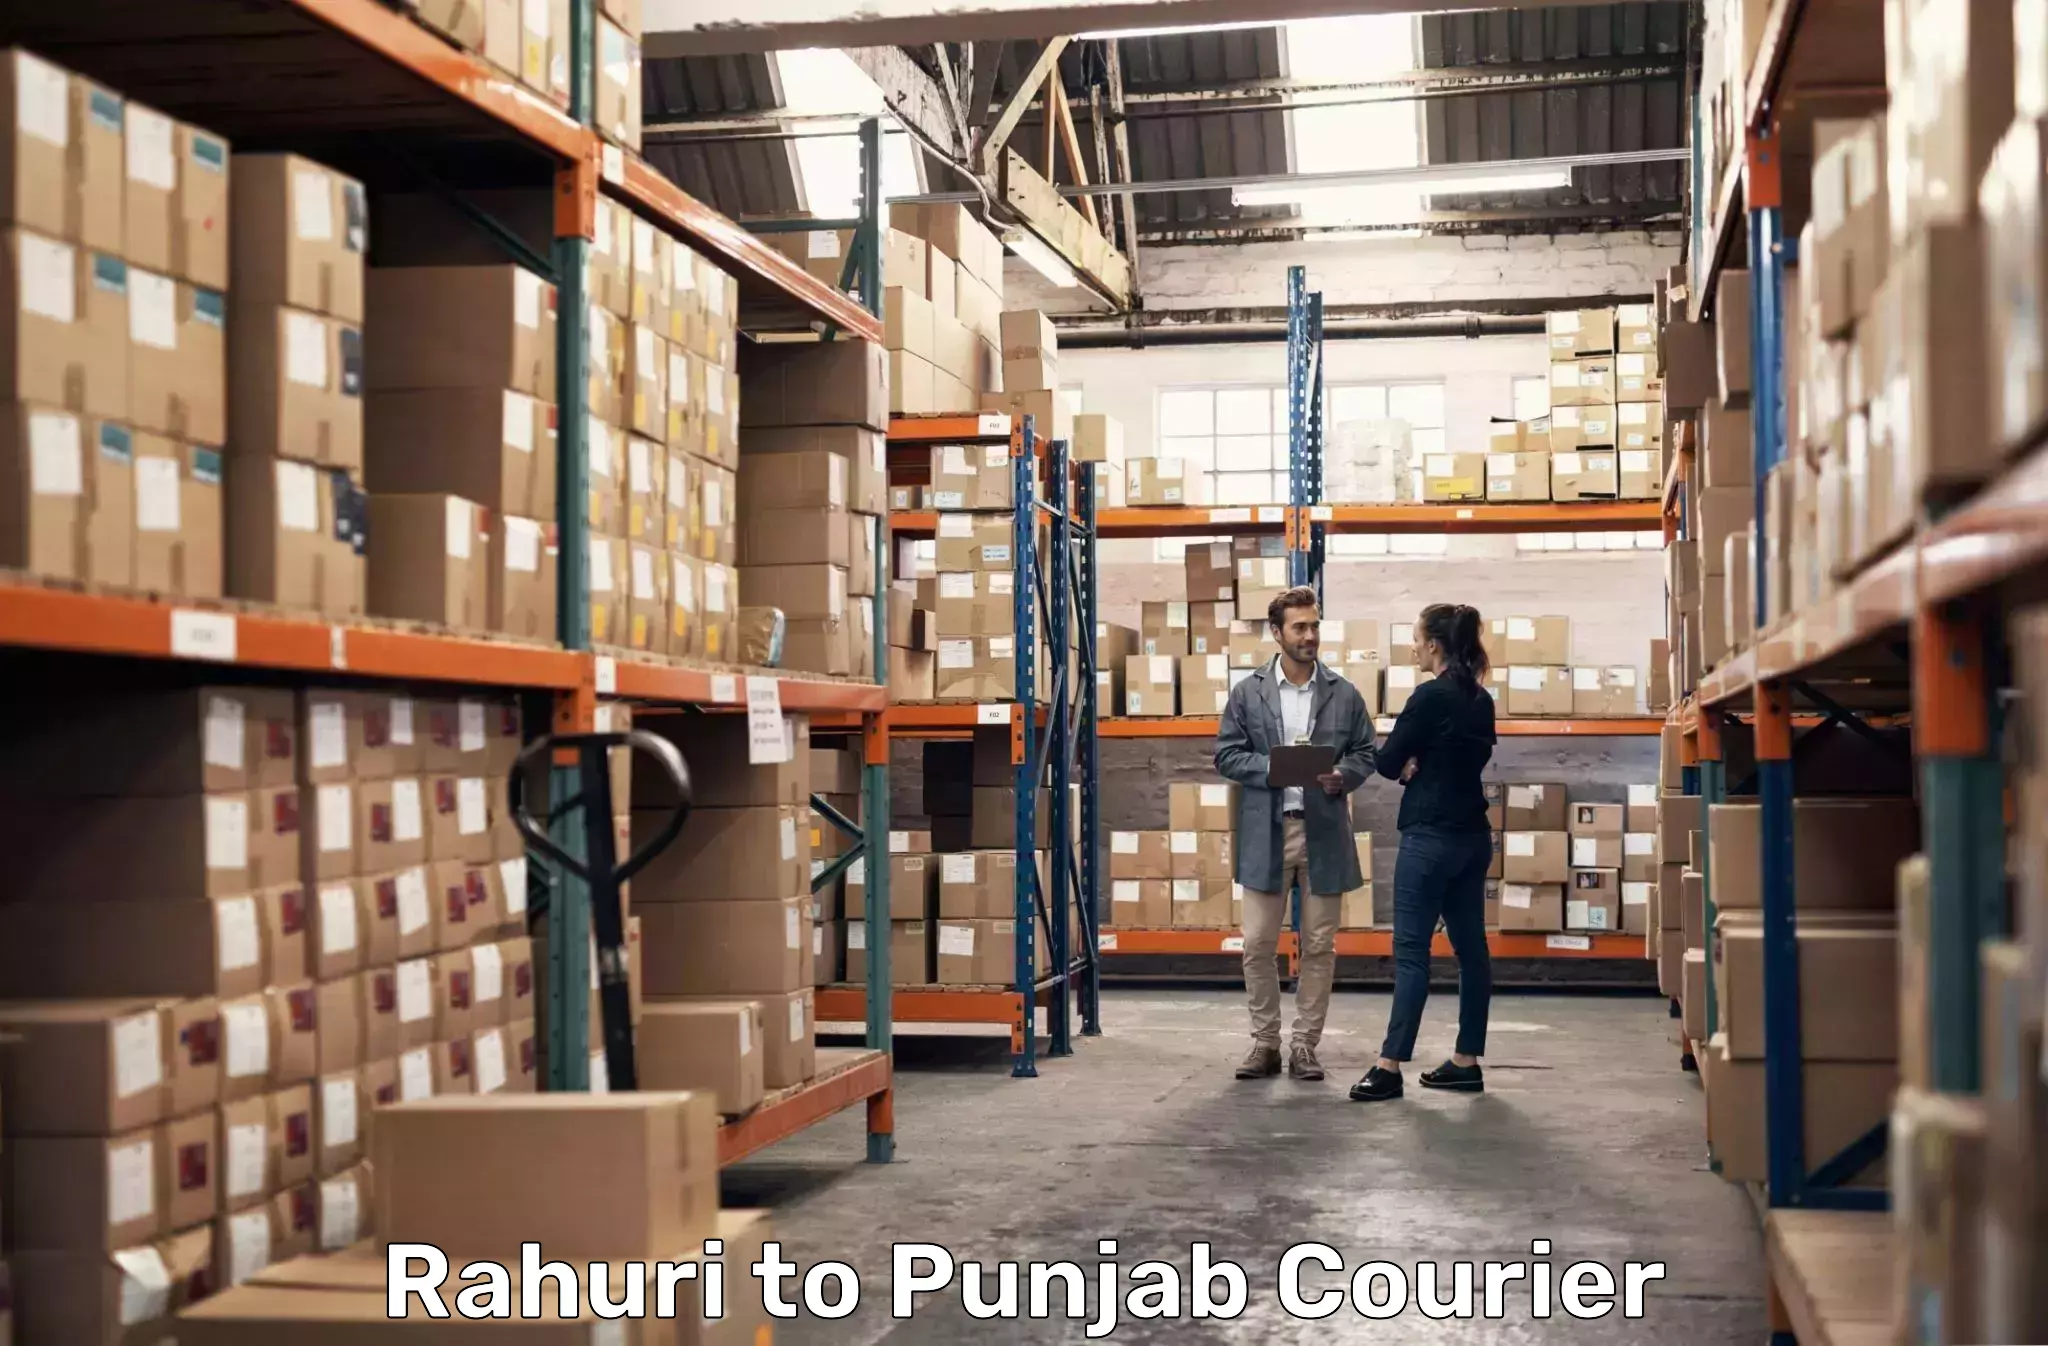 Courier service comparison Rahuri to Muktsar